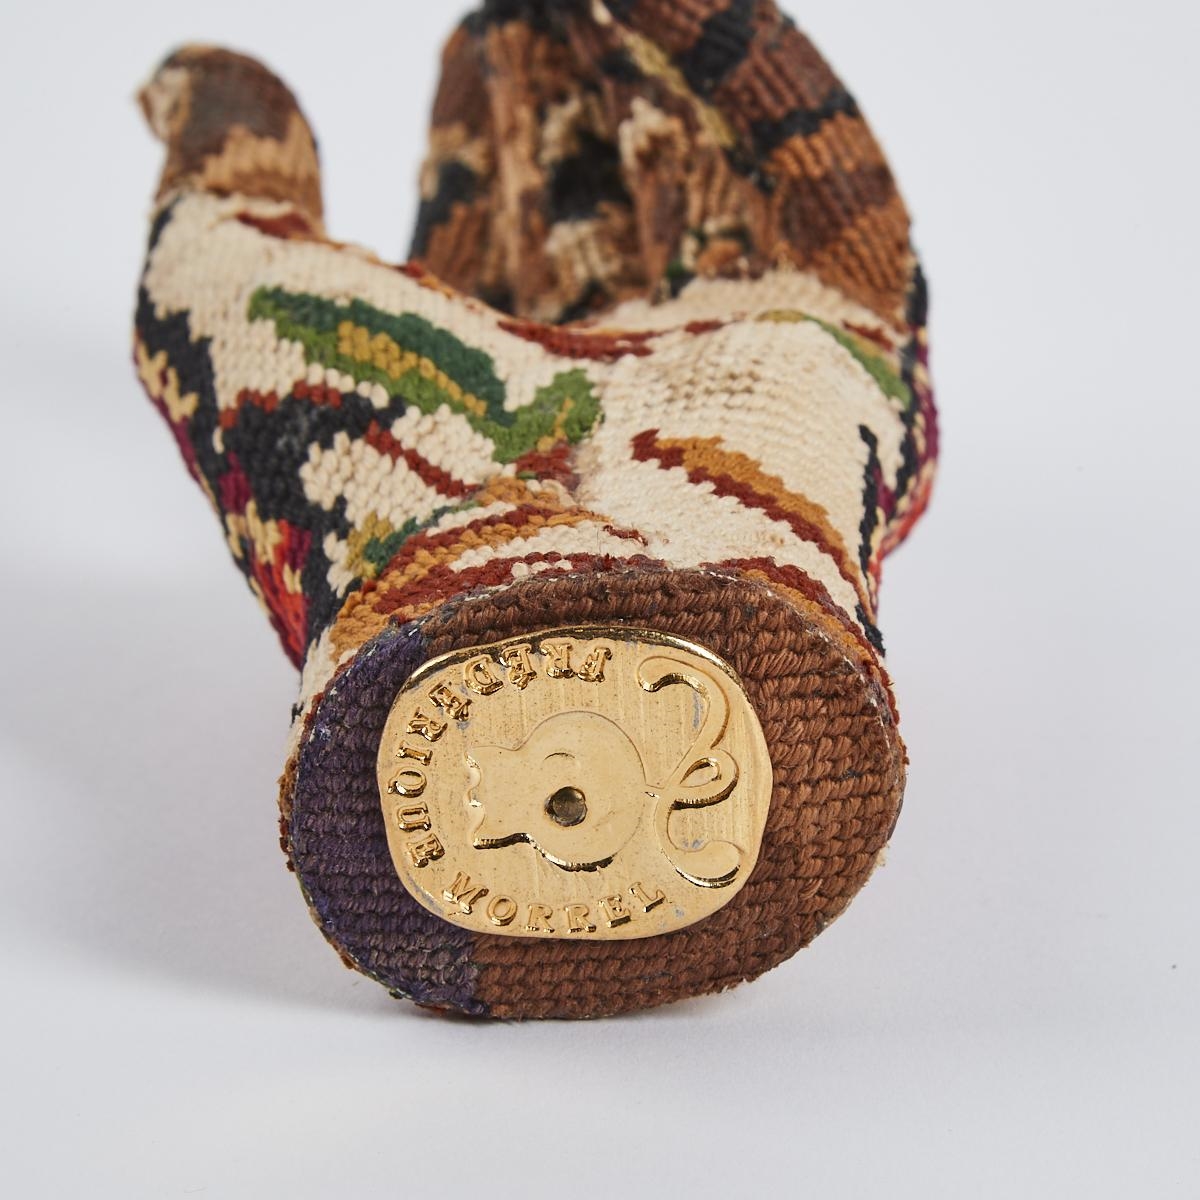 Artwork by Frédérique Morrel, A Textile Hand by Frederique Morrel, Made of Textile